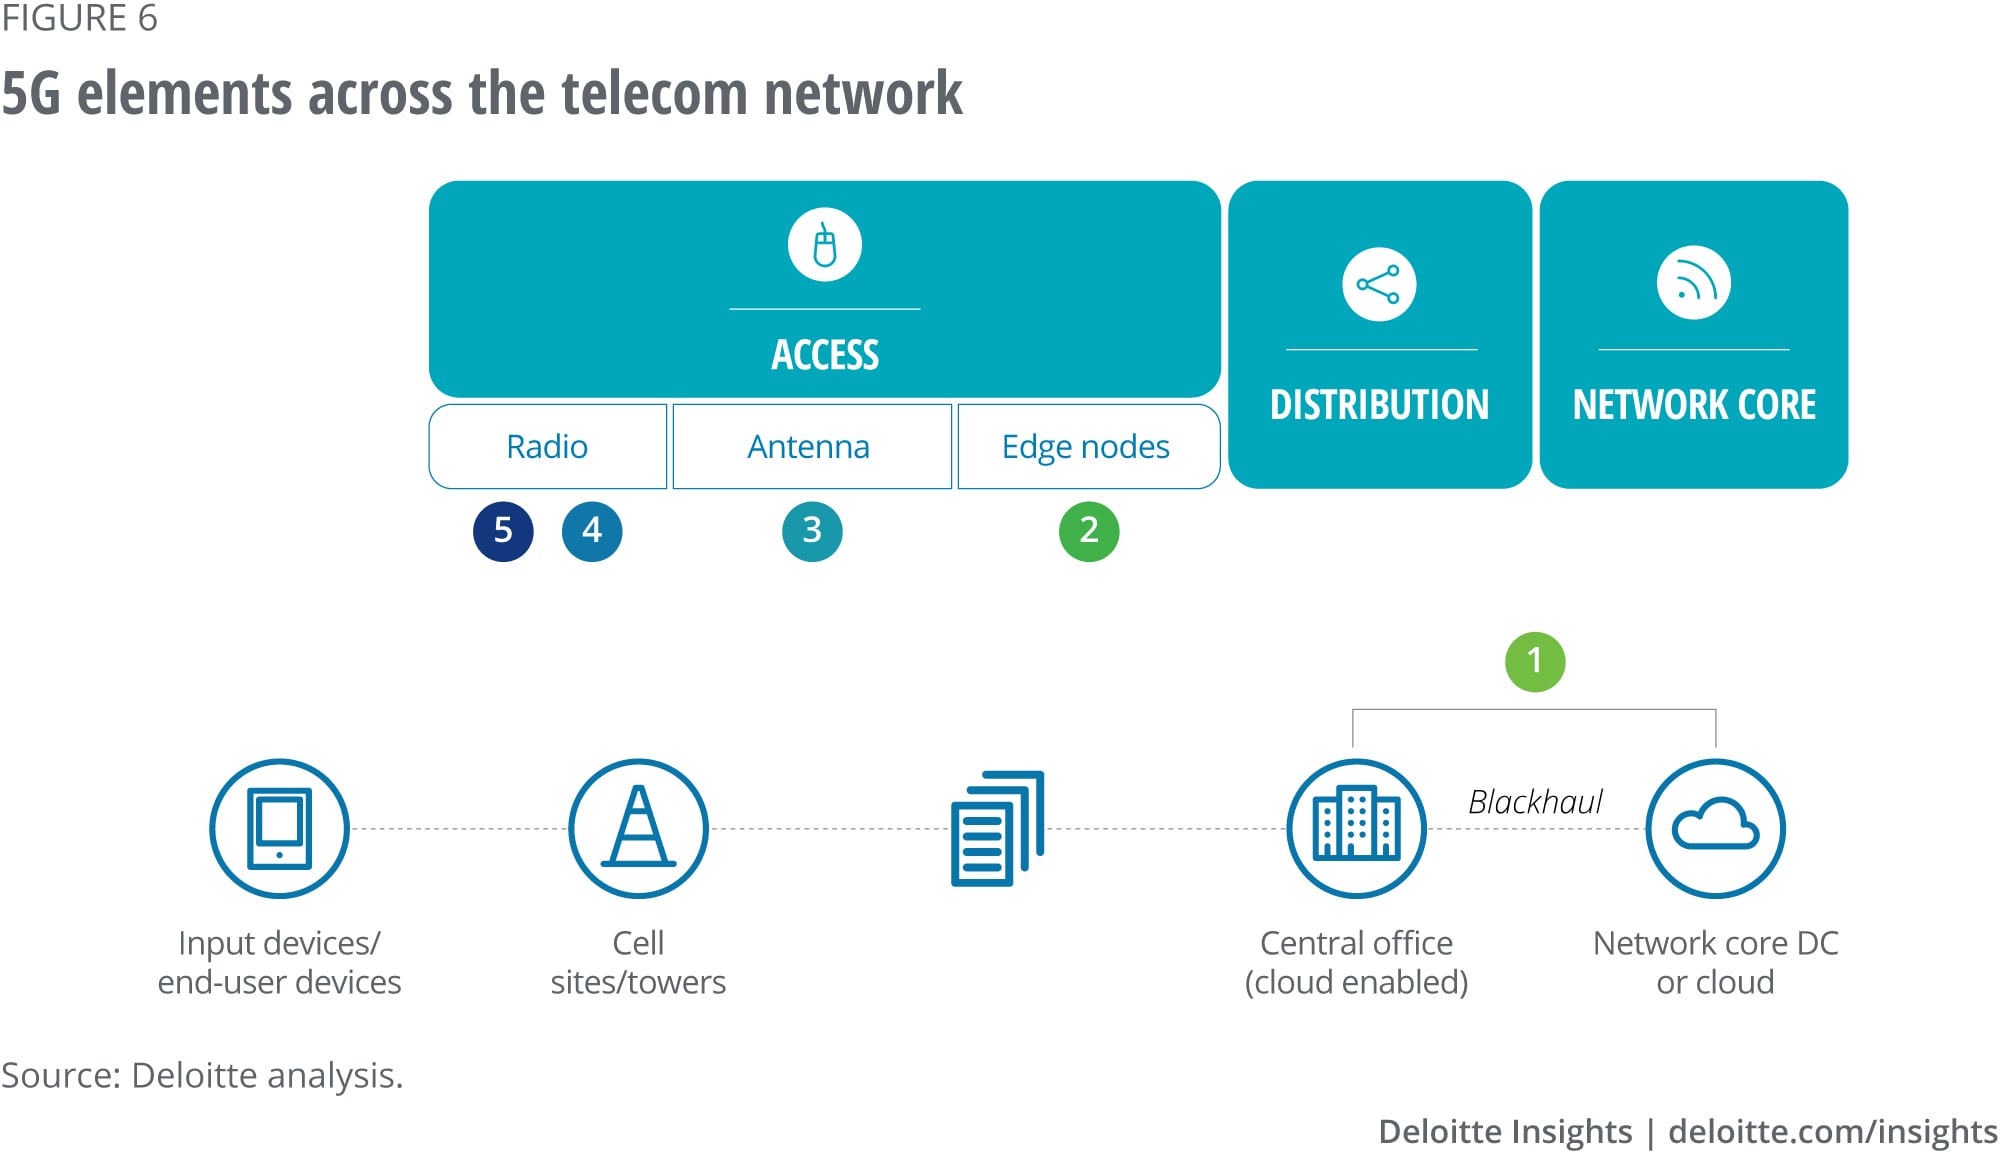 5G elements across the telecom network